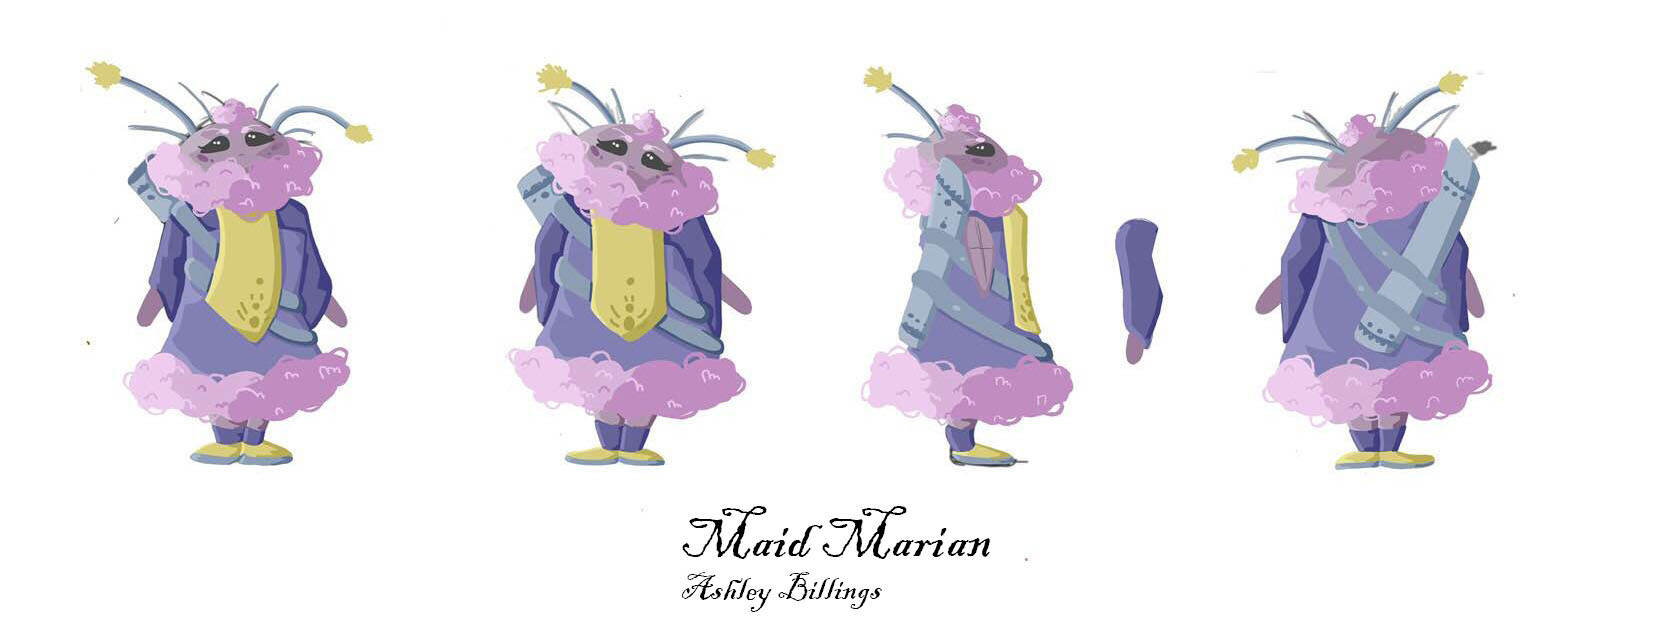 ArtStation - Maid Marian turnaround